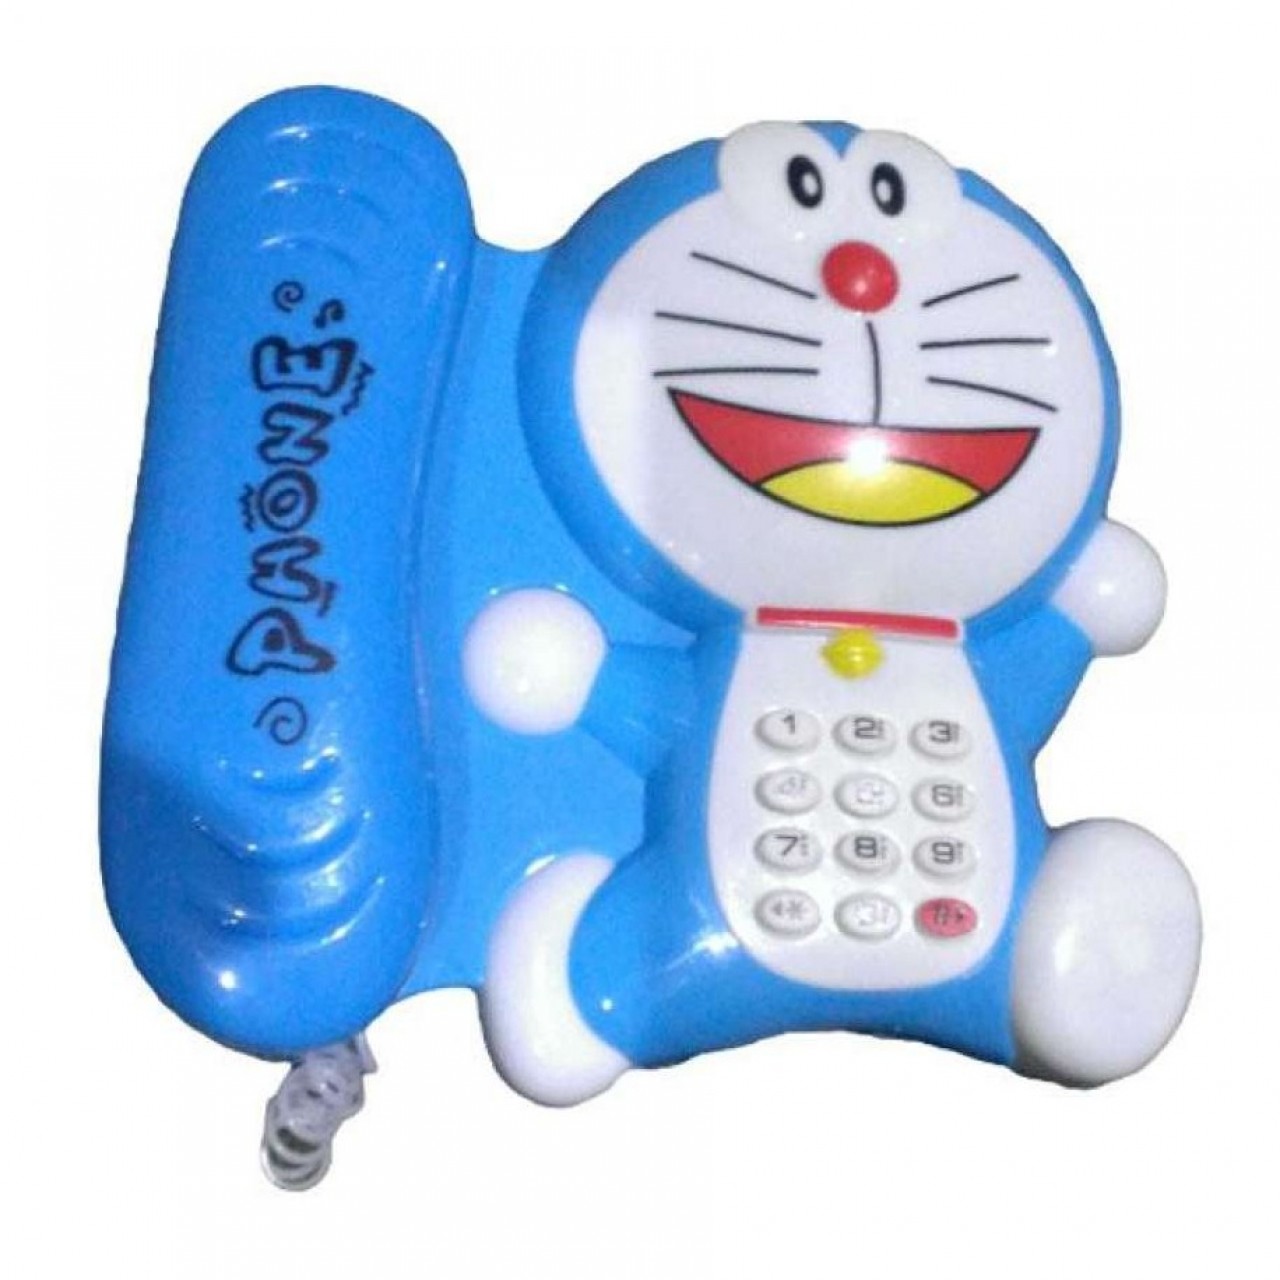 Doremon Phone Set Toy - For Kids